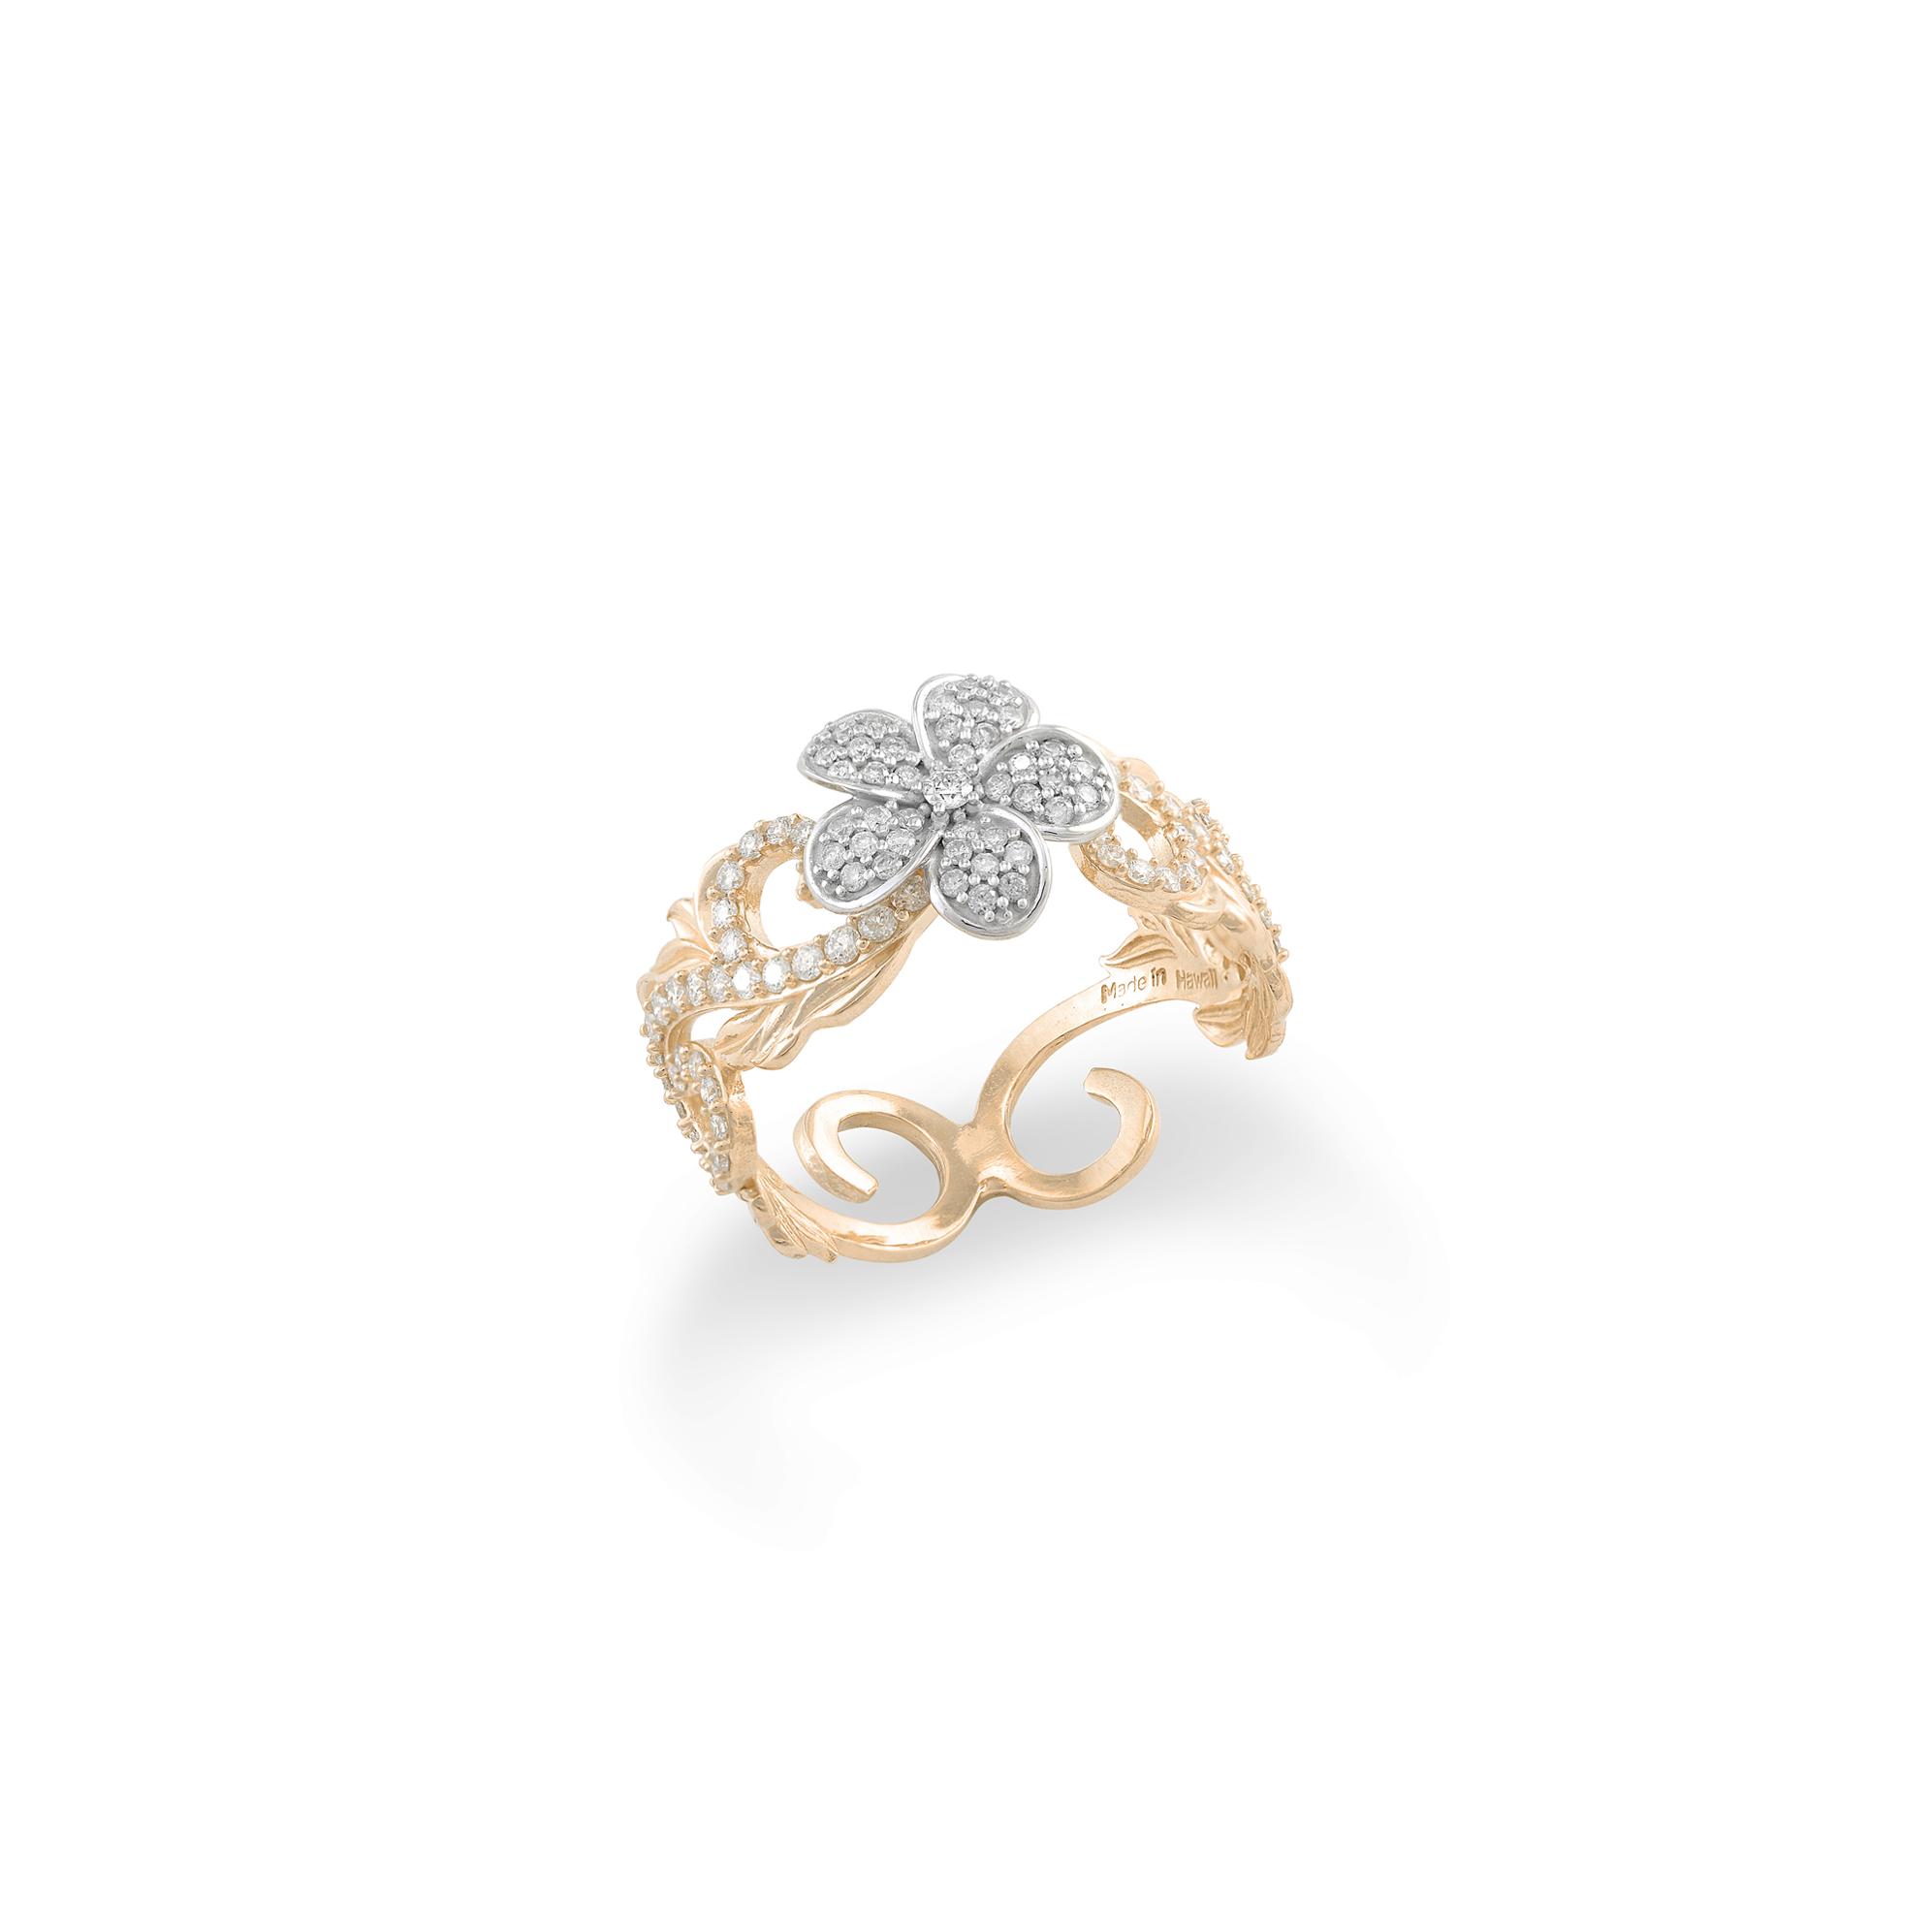 Hawaiian Heirloom Plumeria Ring in Two Tone Gold with Diamonds - 10mm